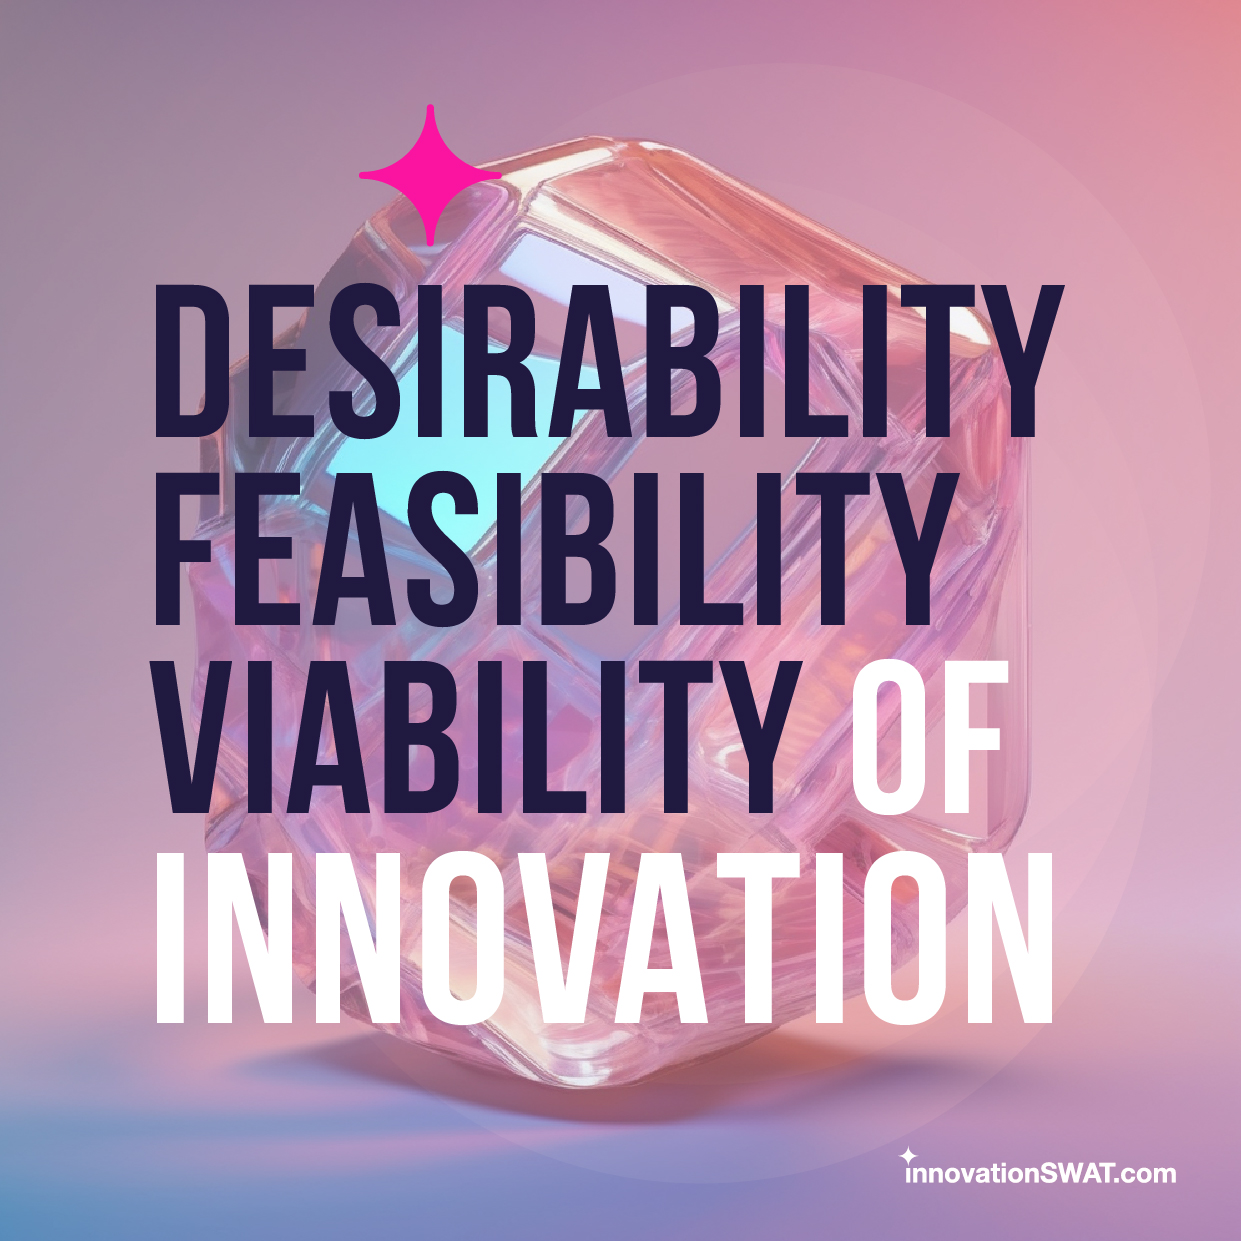 Desirability Feasibility Viability innovation SWAT